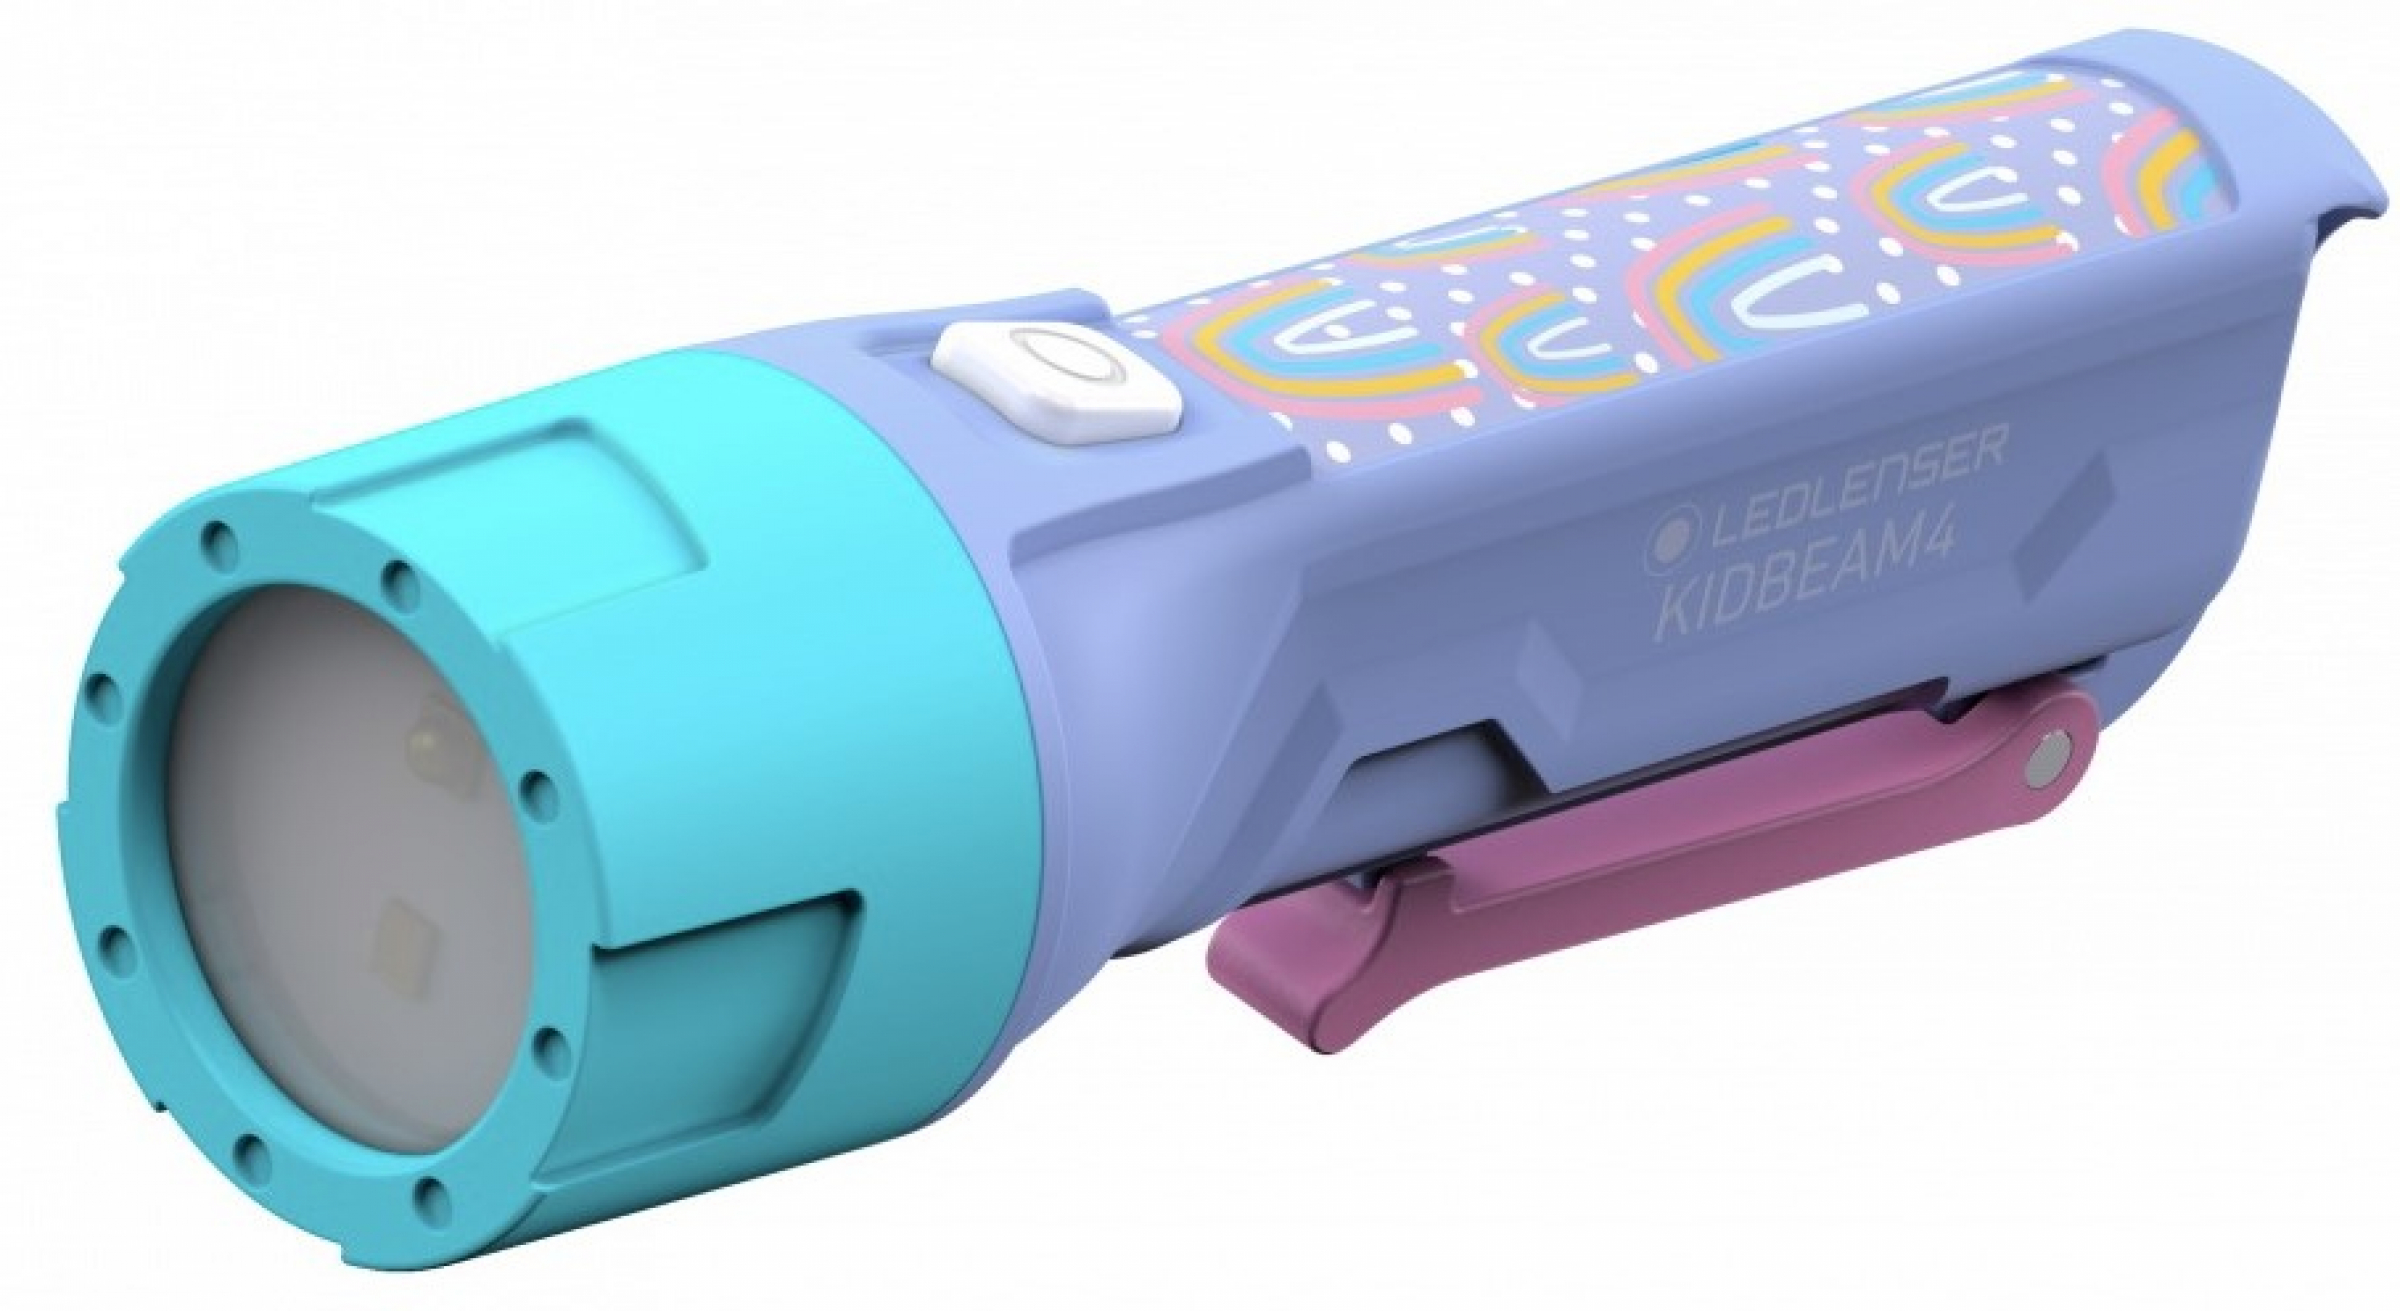 Led Lenser children's flashlight Kidbeam4 - purple